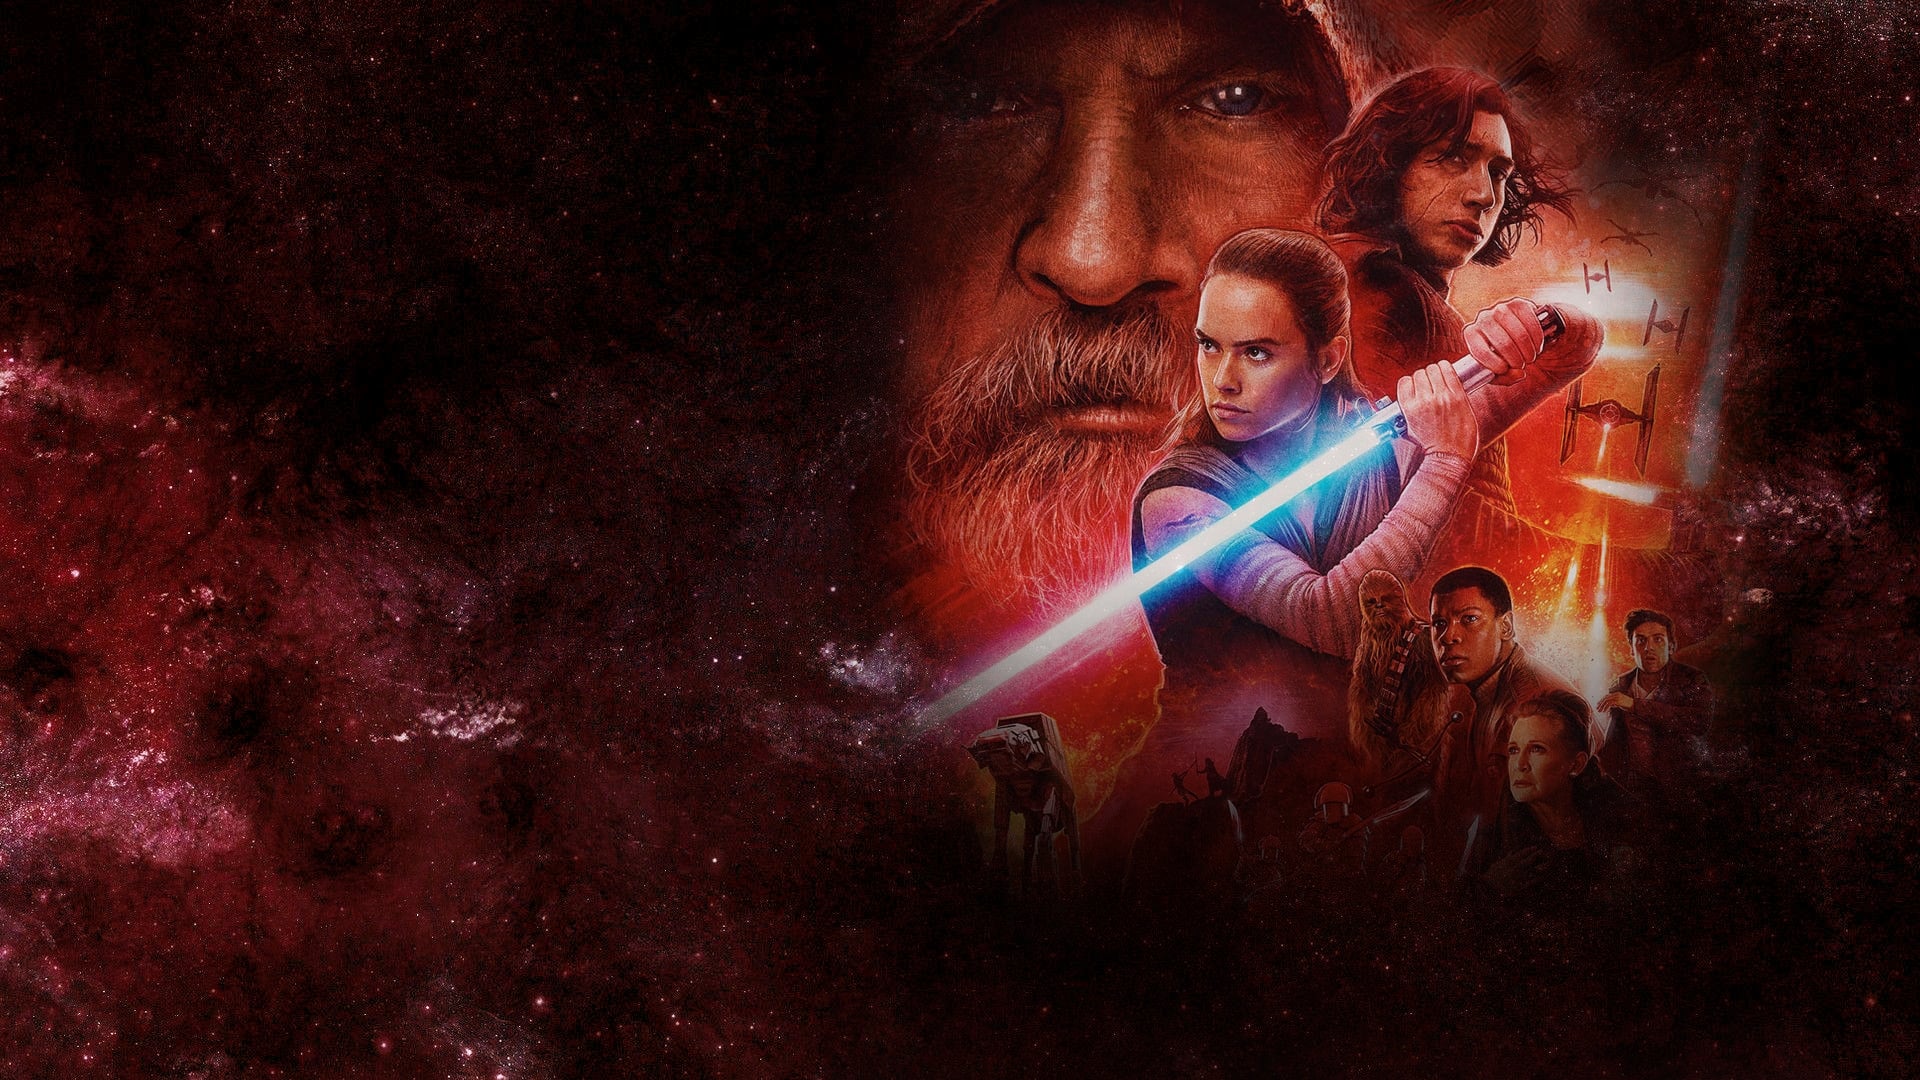 Image du film Star Wars Episode VIII : les derniers Jedi h0mjj9xtbwpiykw1bhps2grdjlijpg